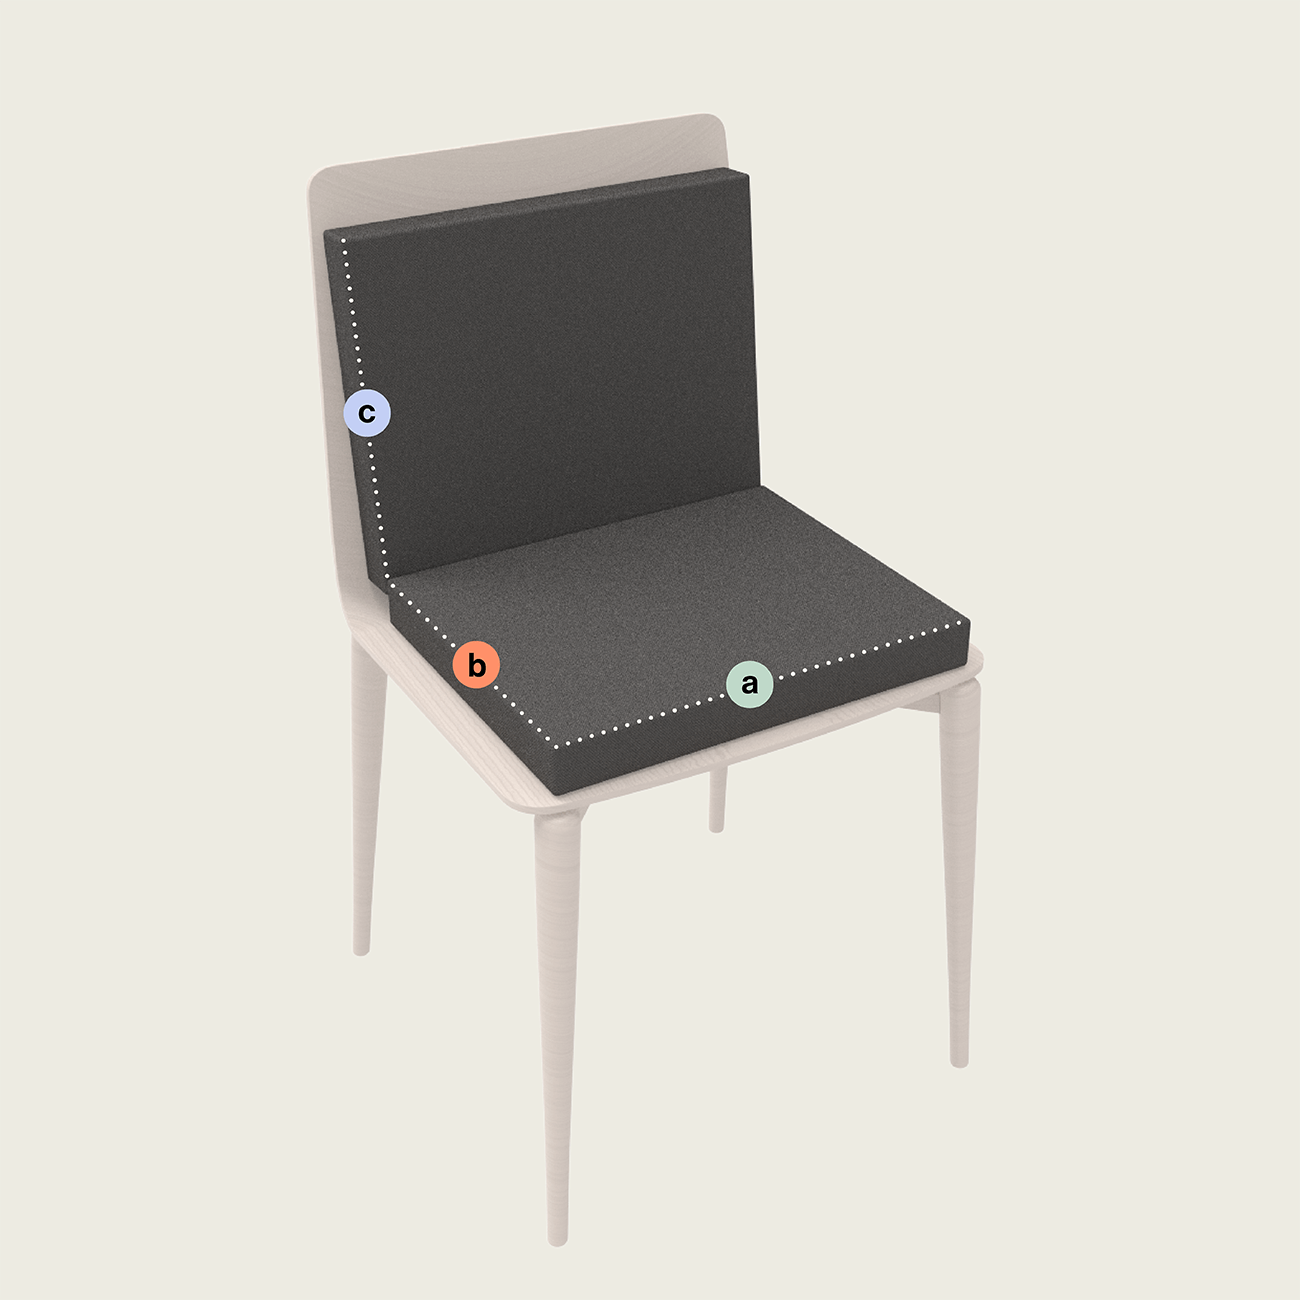 Klappbares bzw. faltbares Stuhl Polster von Snooze Project